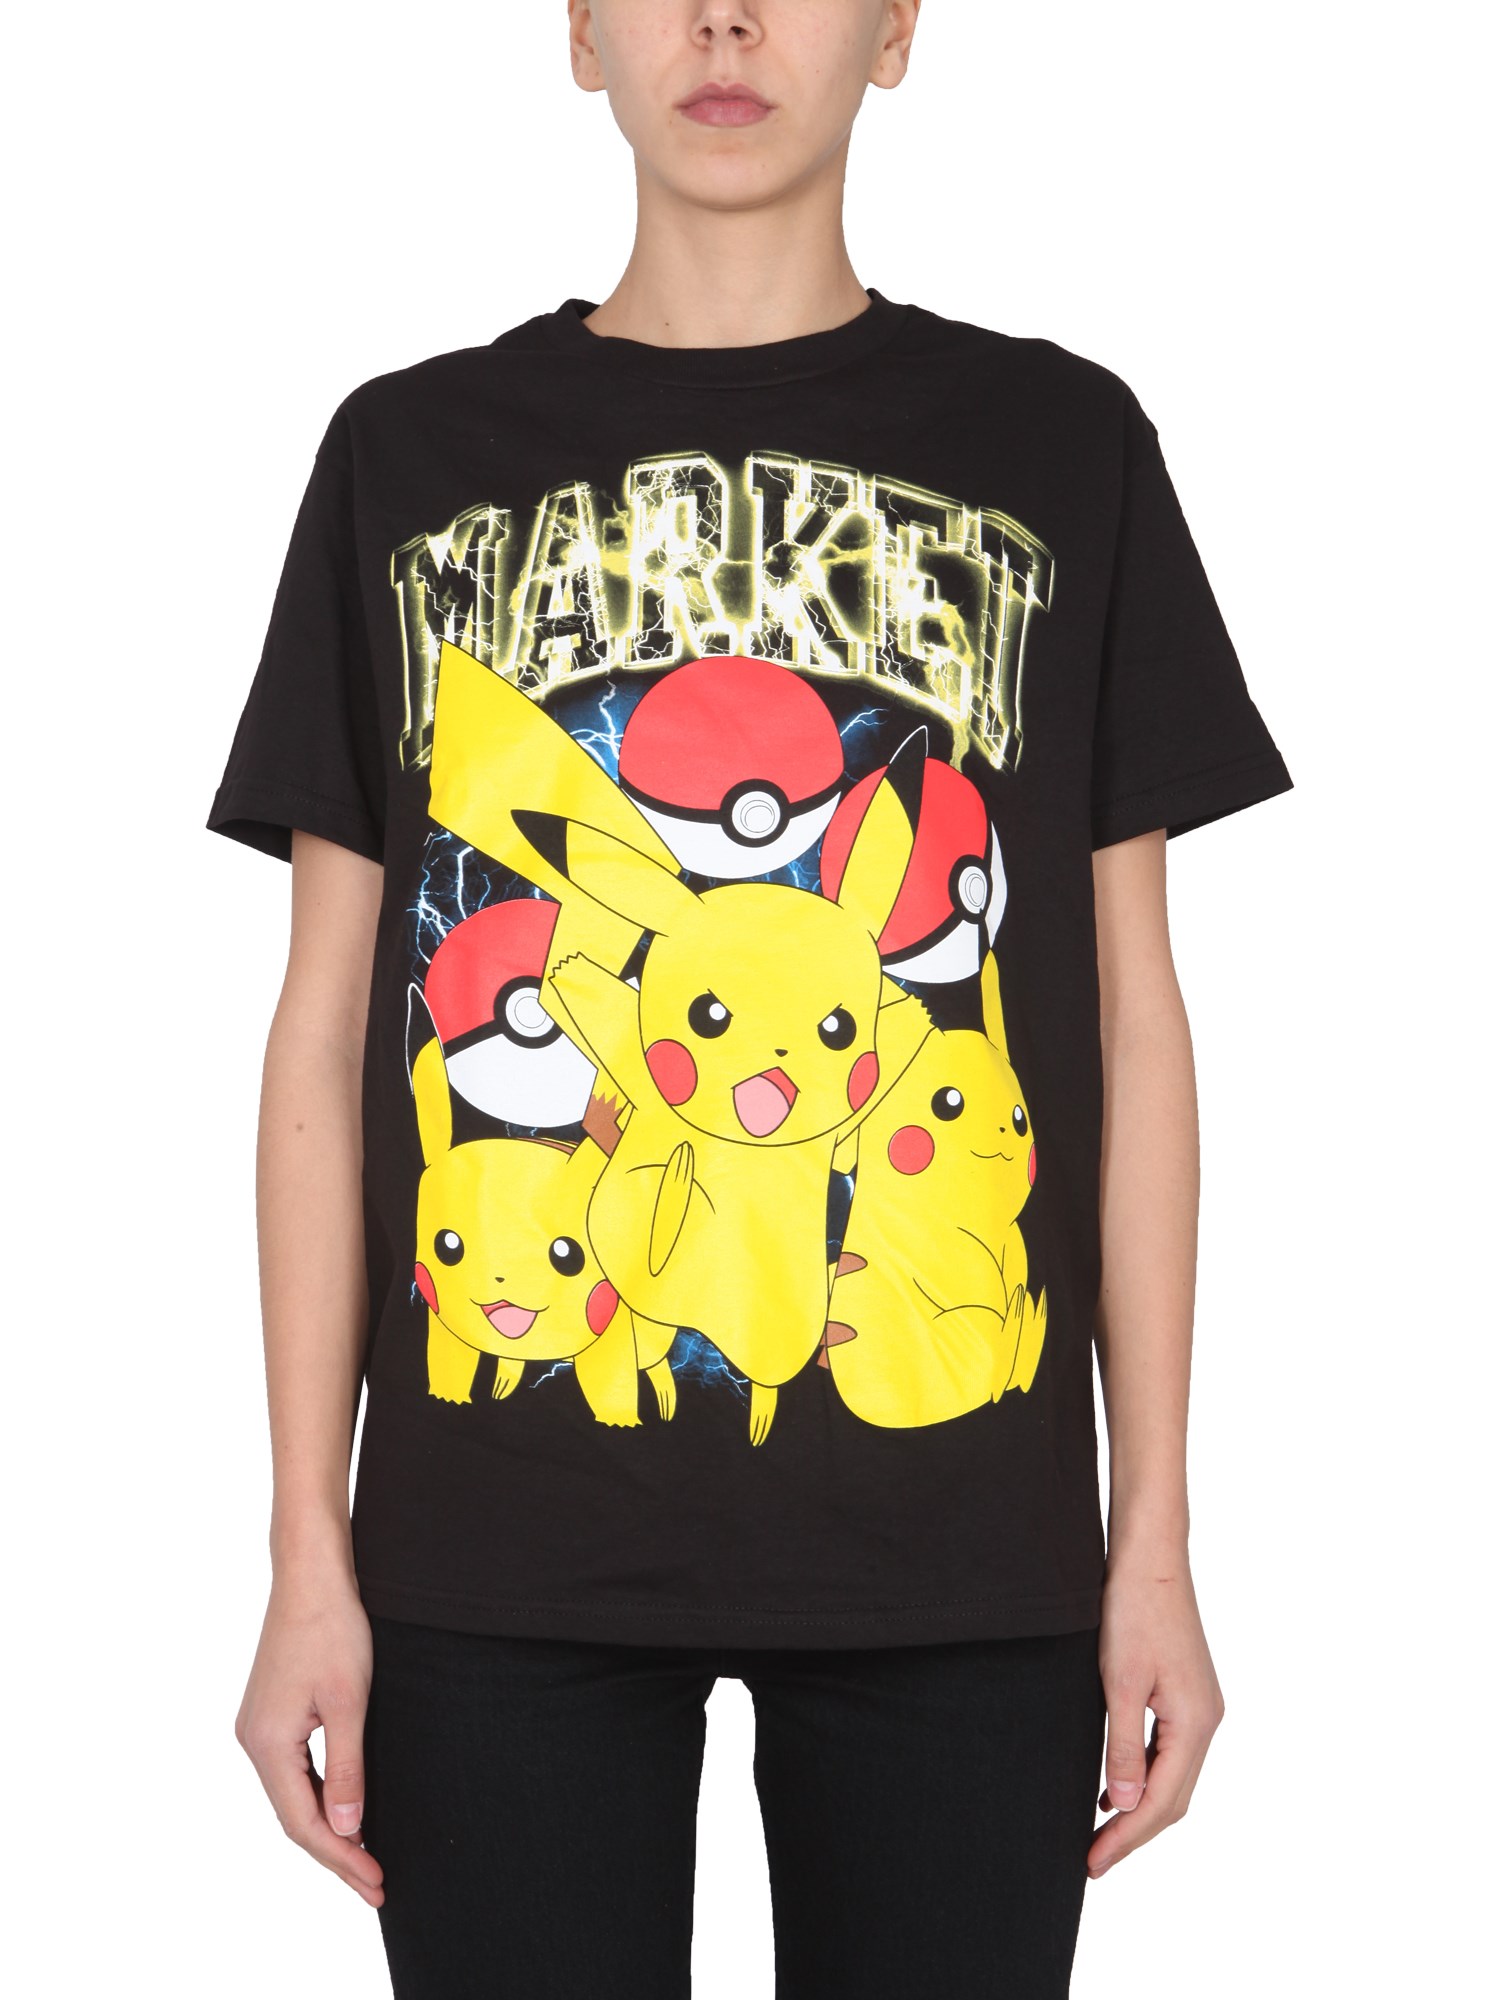 market "pokemon pikachu" t-shirt